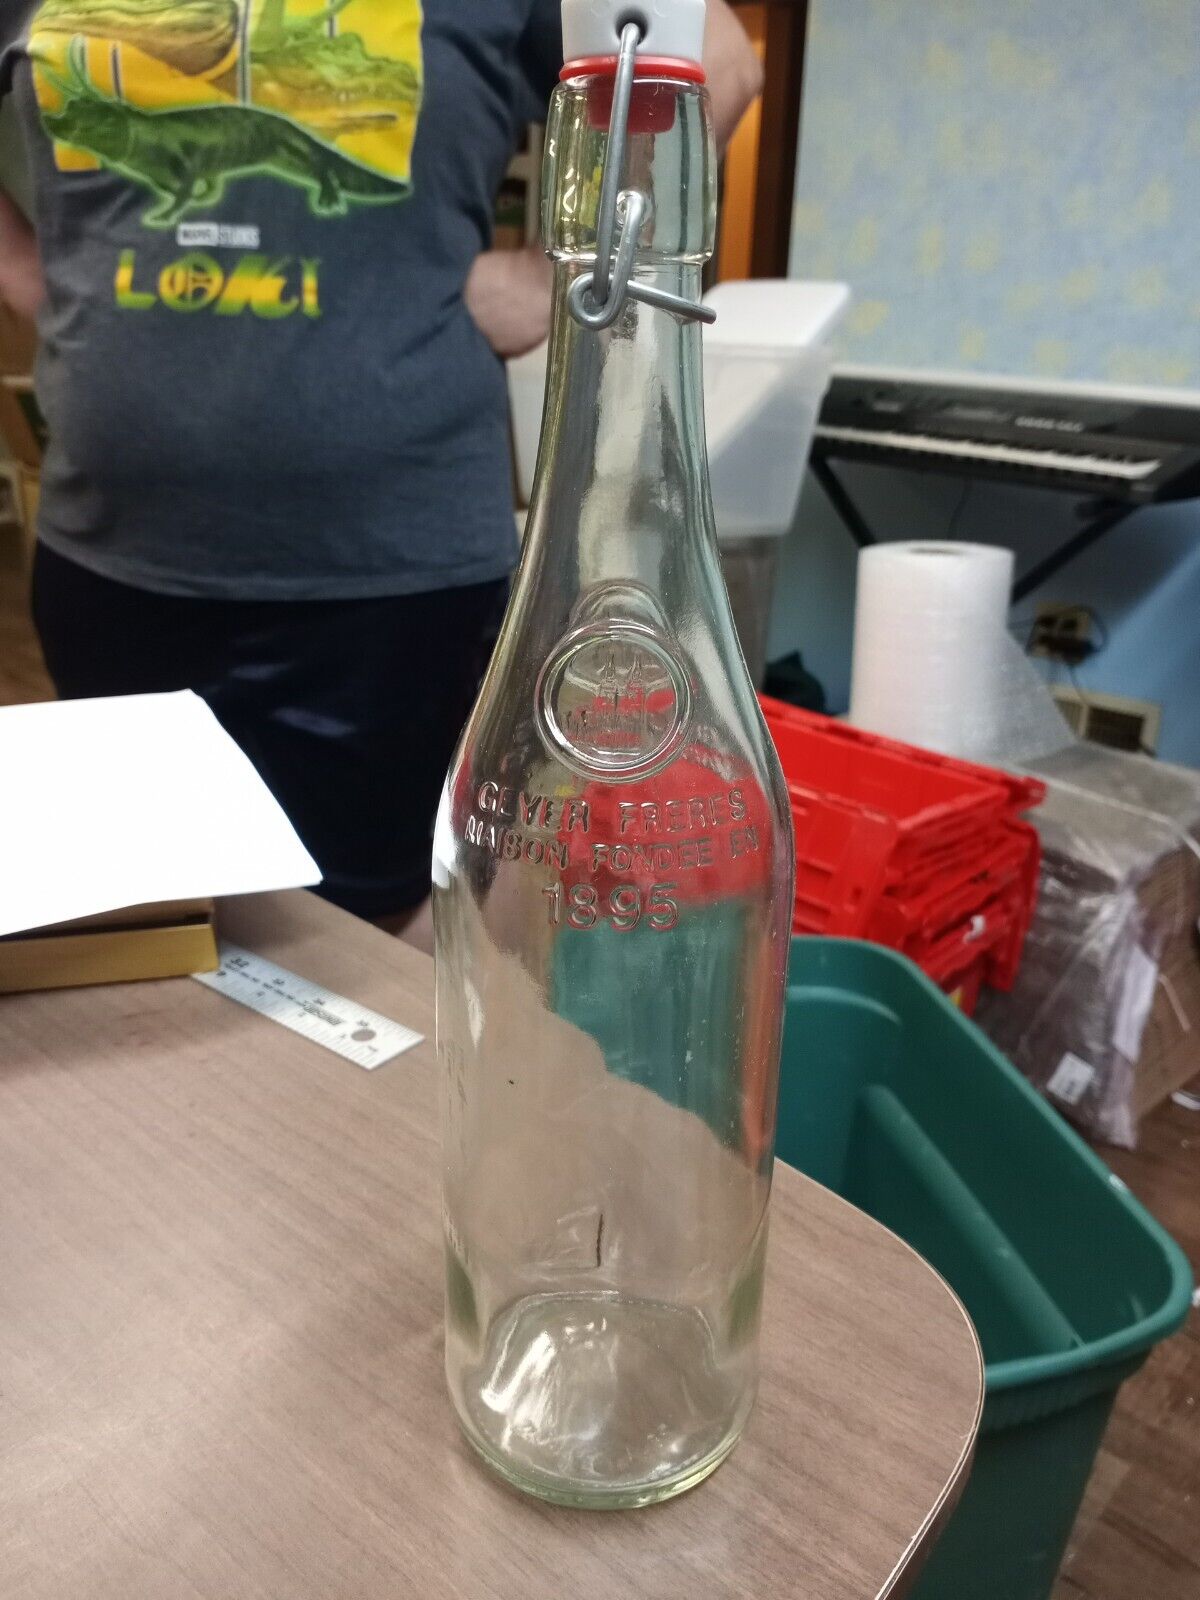 EMPTY Geyer Freres Maison, Fondee En 1895 Clear Glass Bottle with Cap